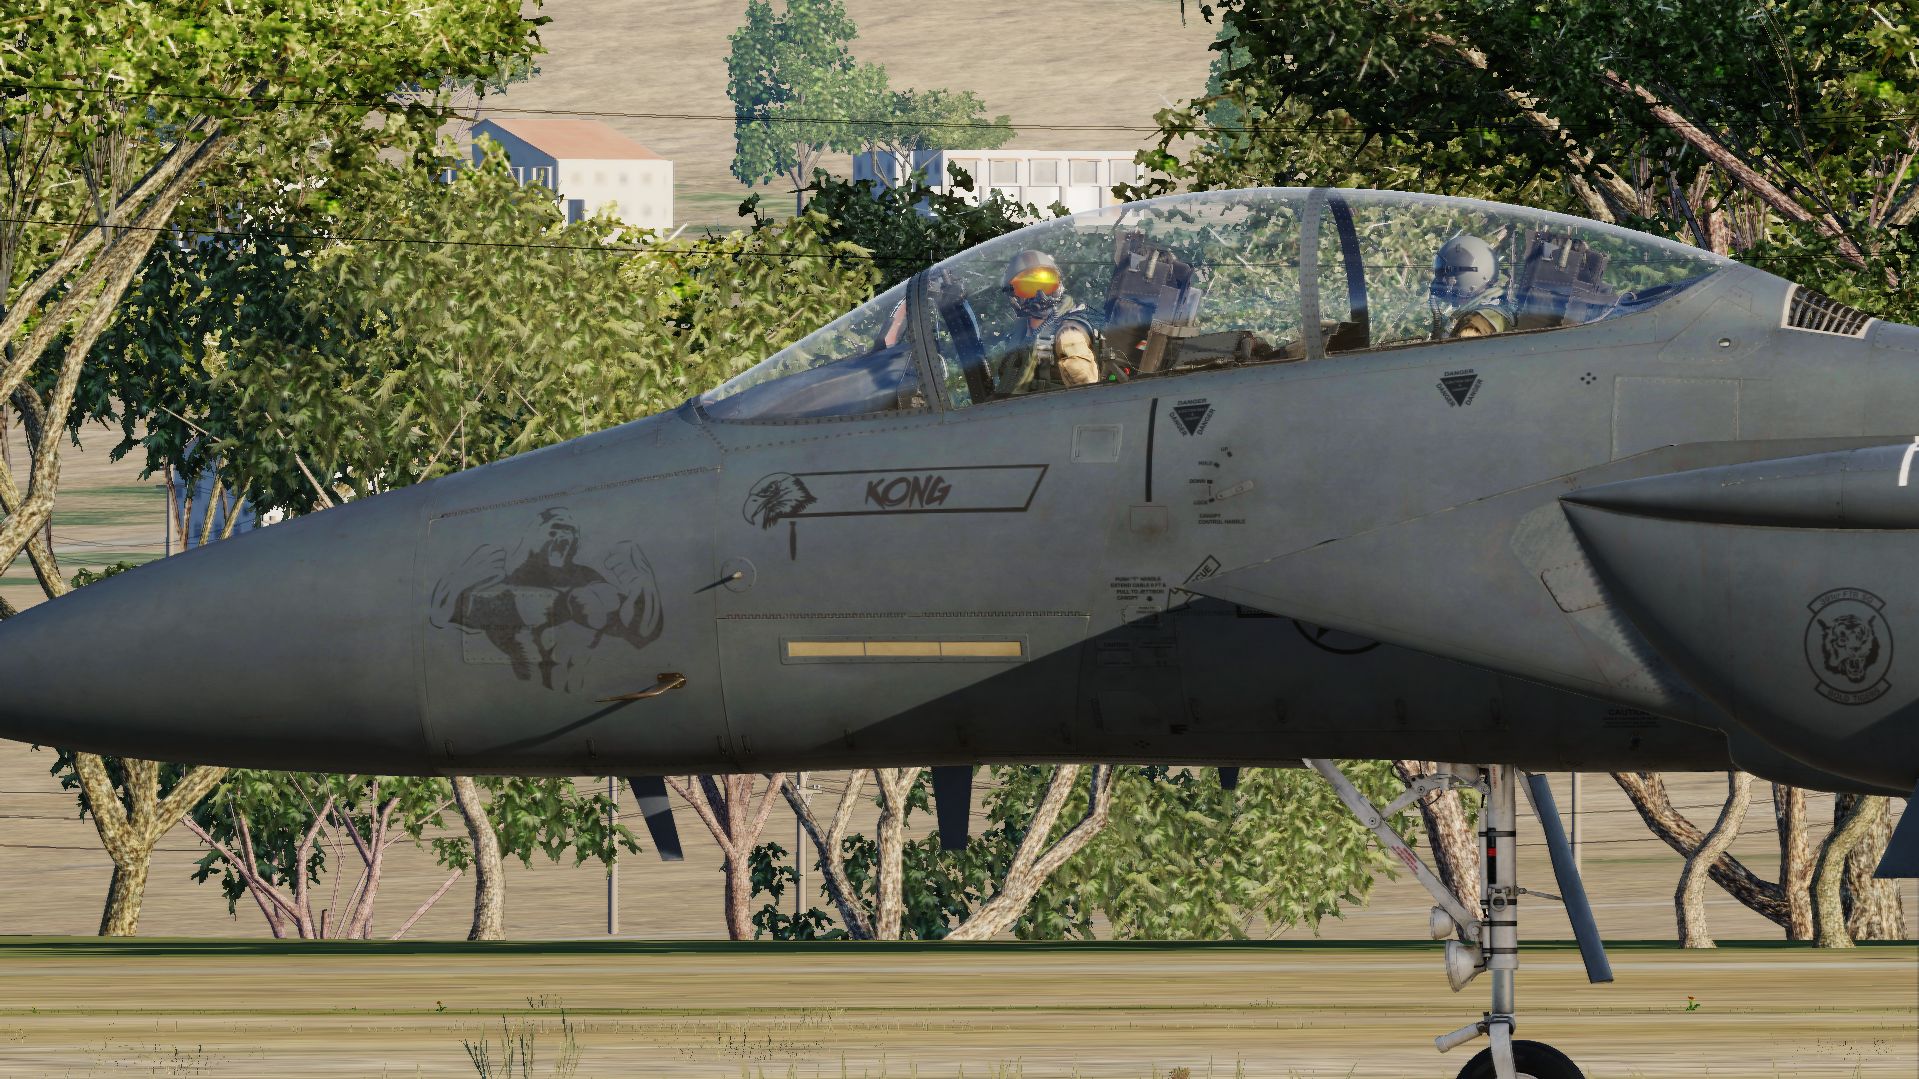 F-15E Strike eagle MO 90-241 "kong"